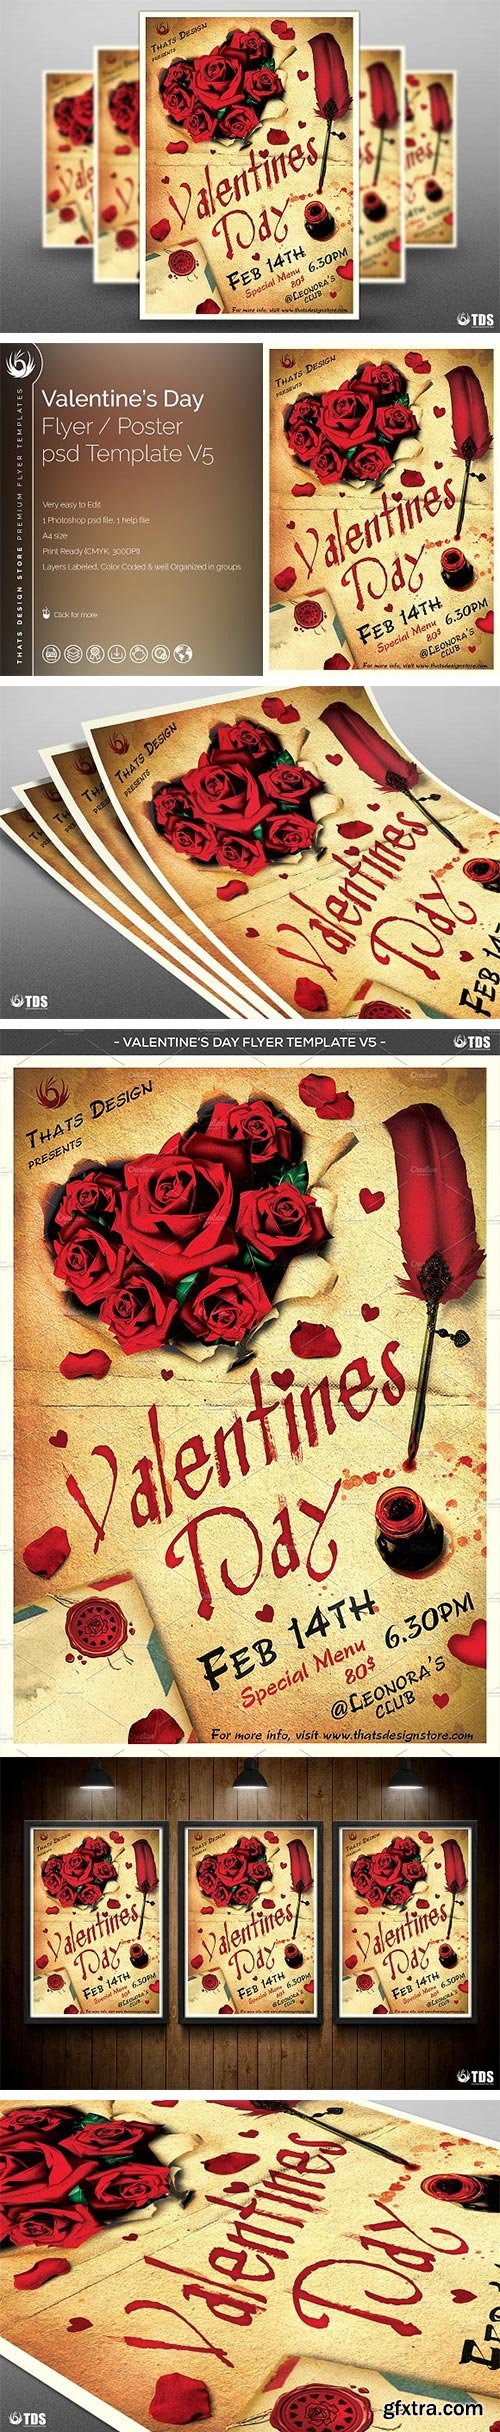 CreativeMarket - Valentines Day Flyer Template V5 149076